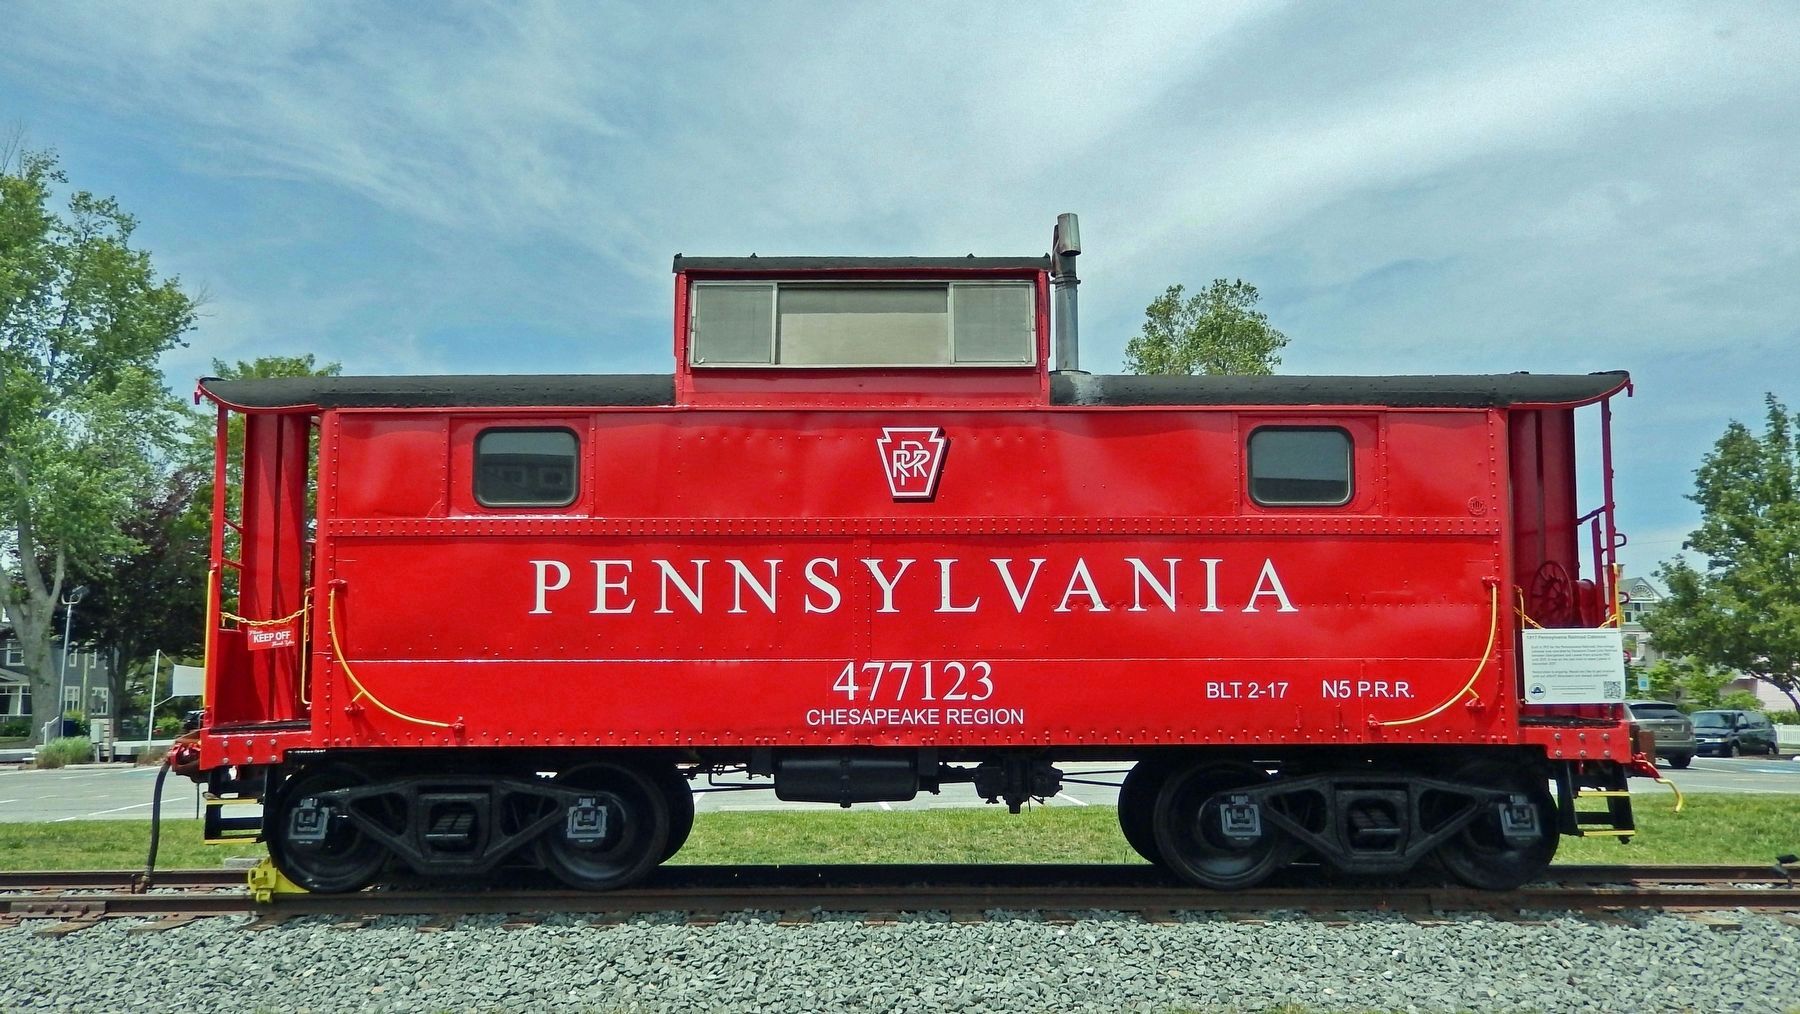 1917 Pennsylvania Railroad Caboose image. Click for full size.